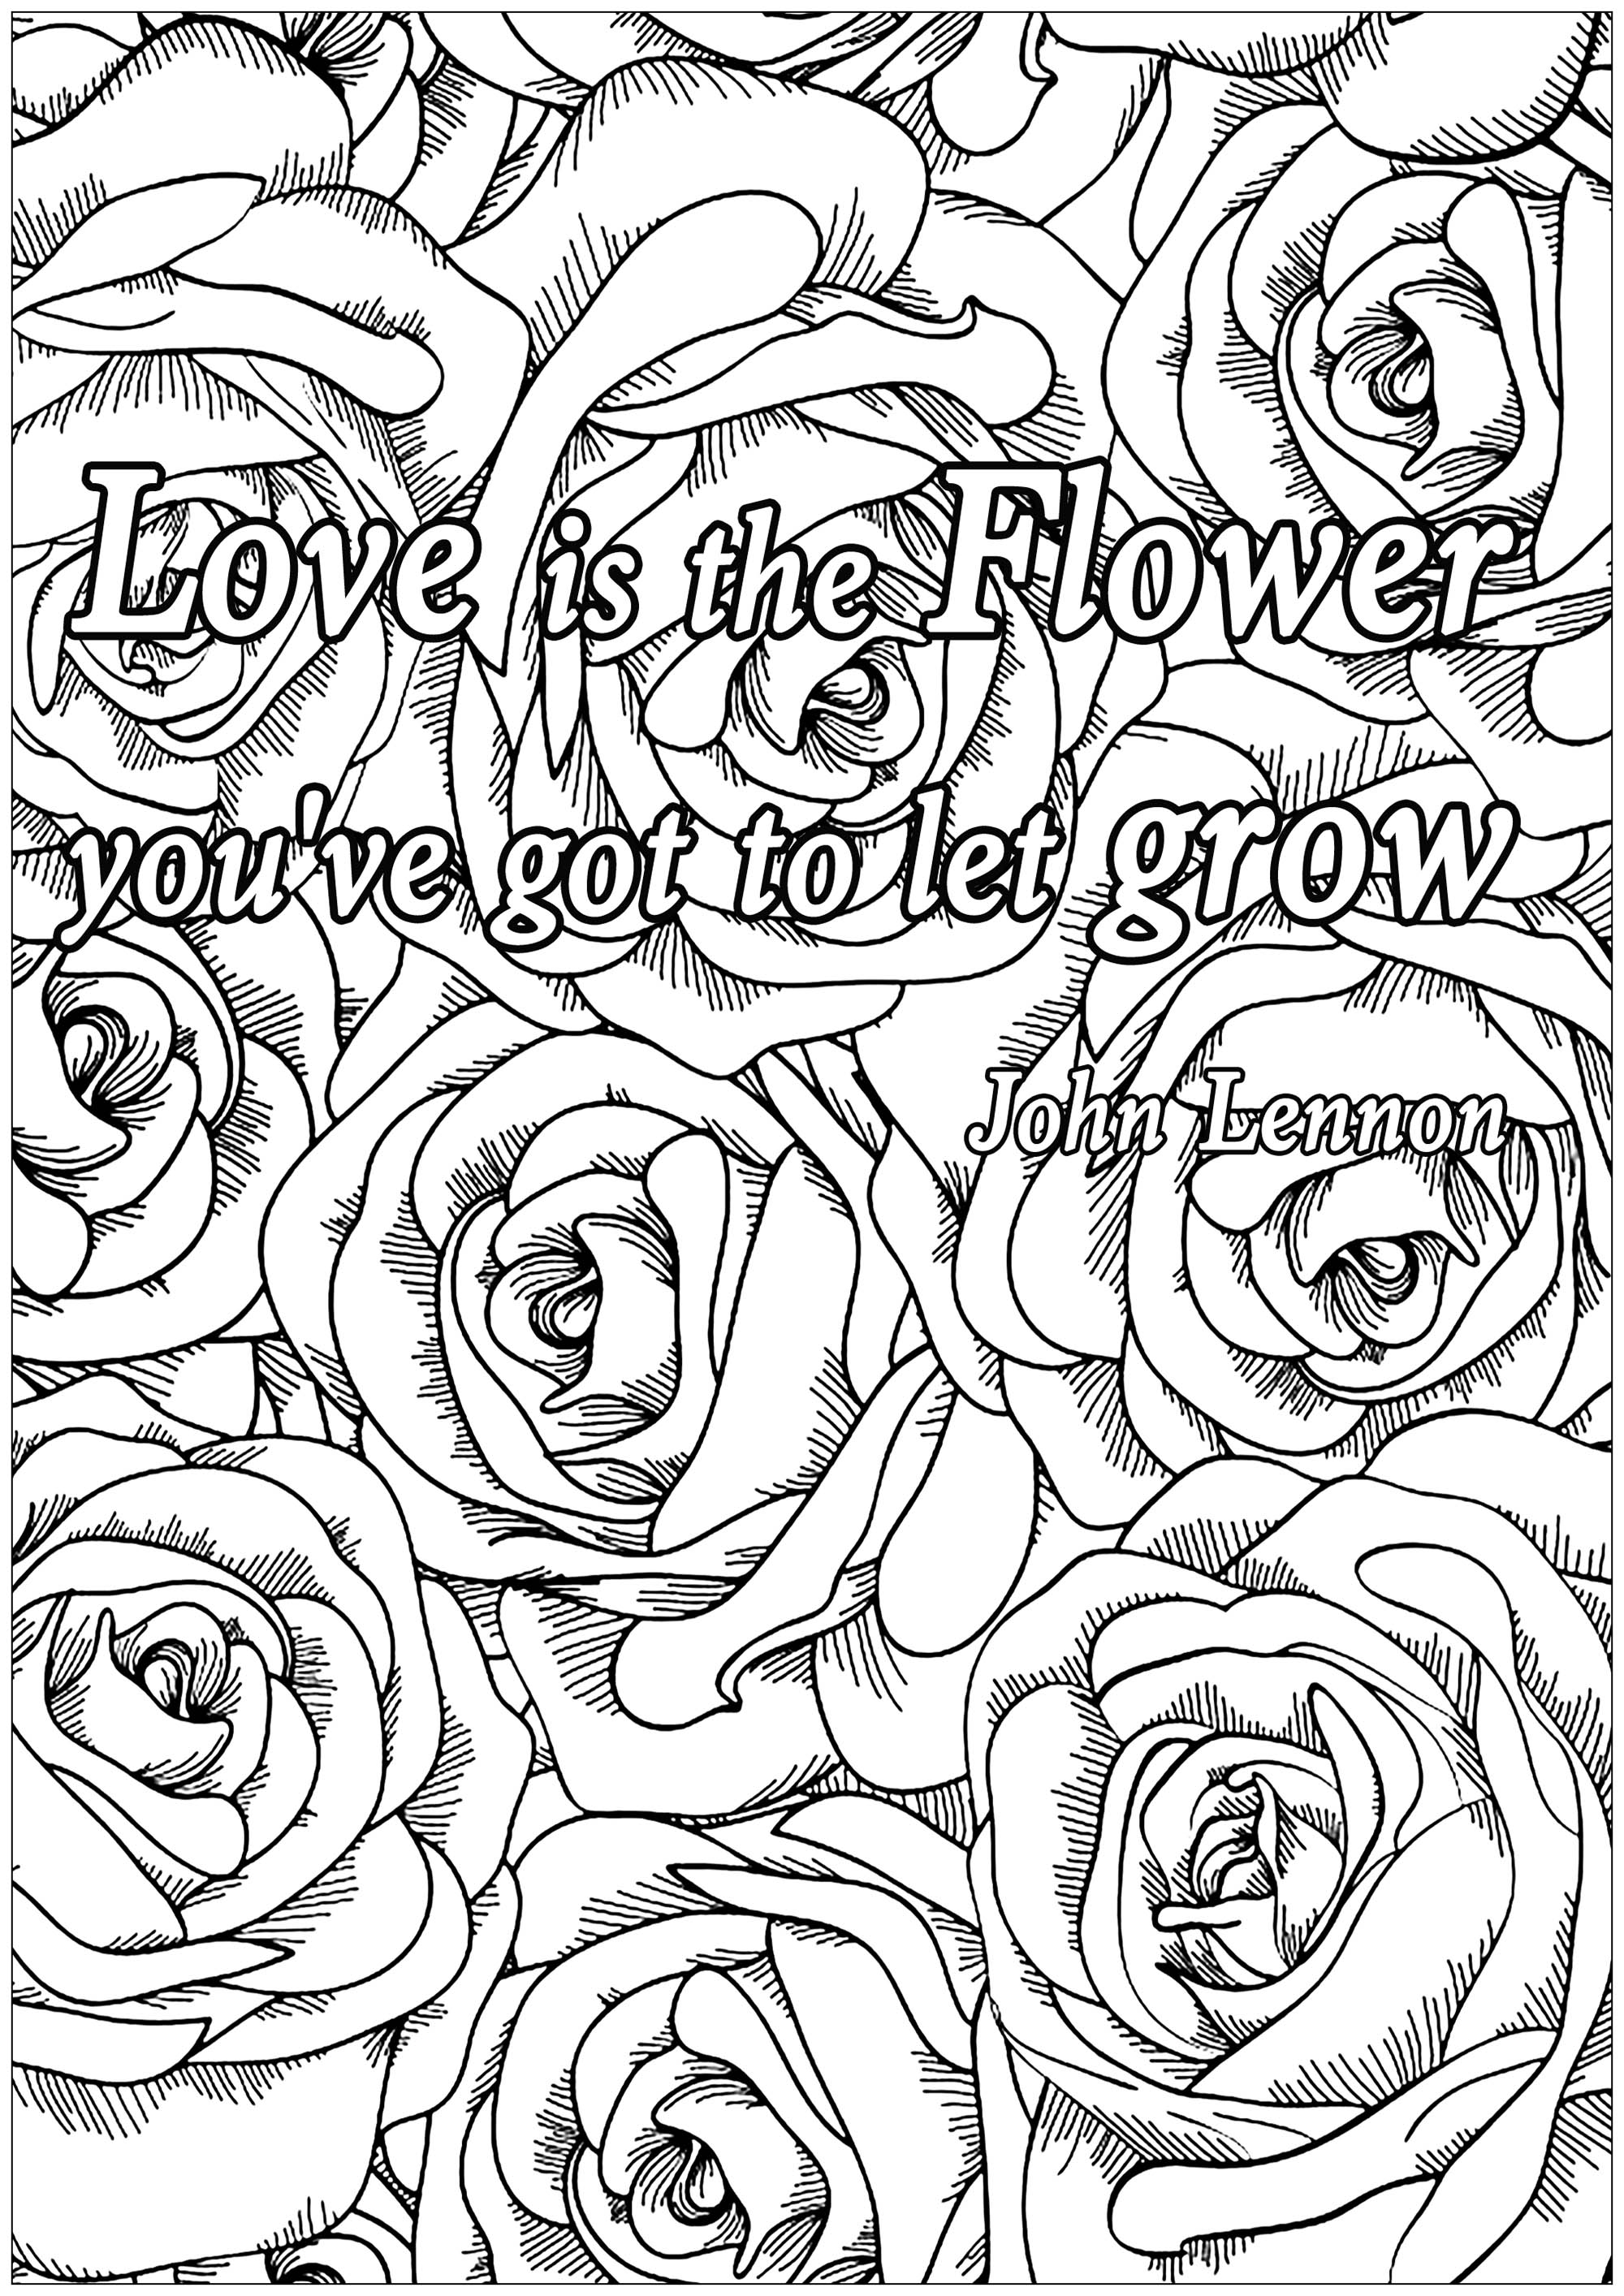 Love is the Flower you've got to let grow, John Lennon (con sfondo pieno di rose)